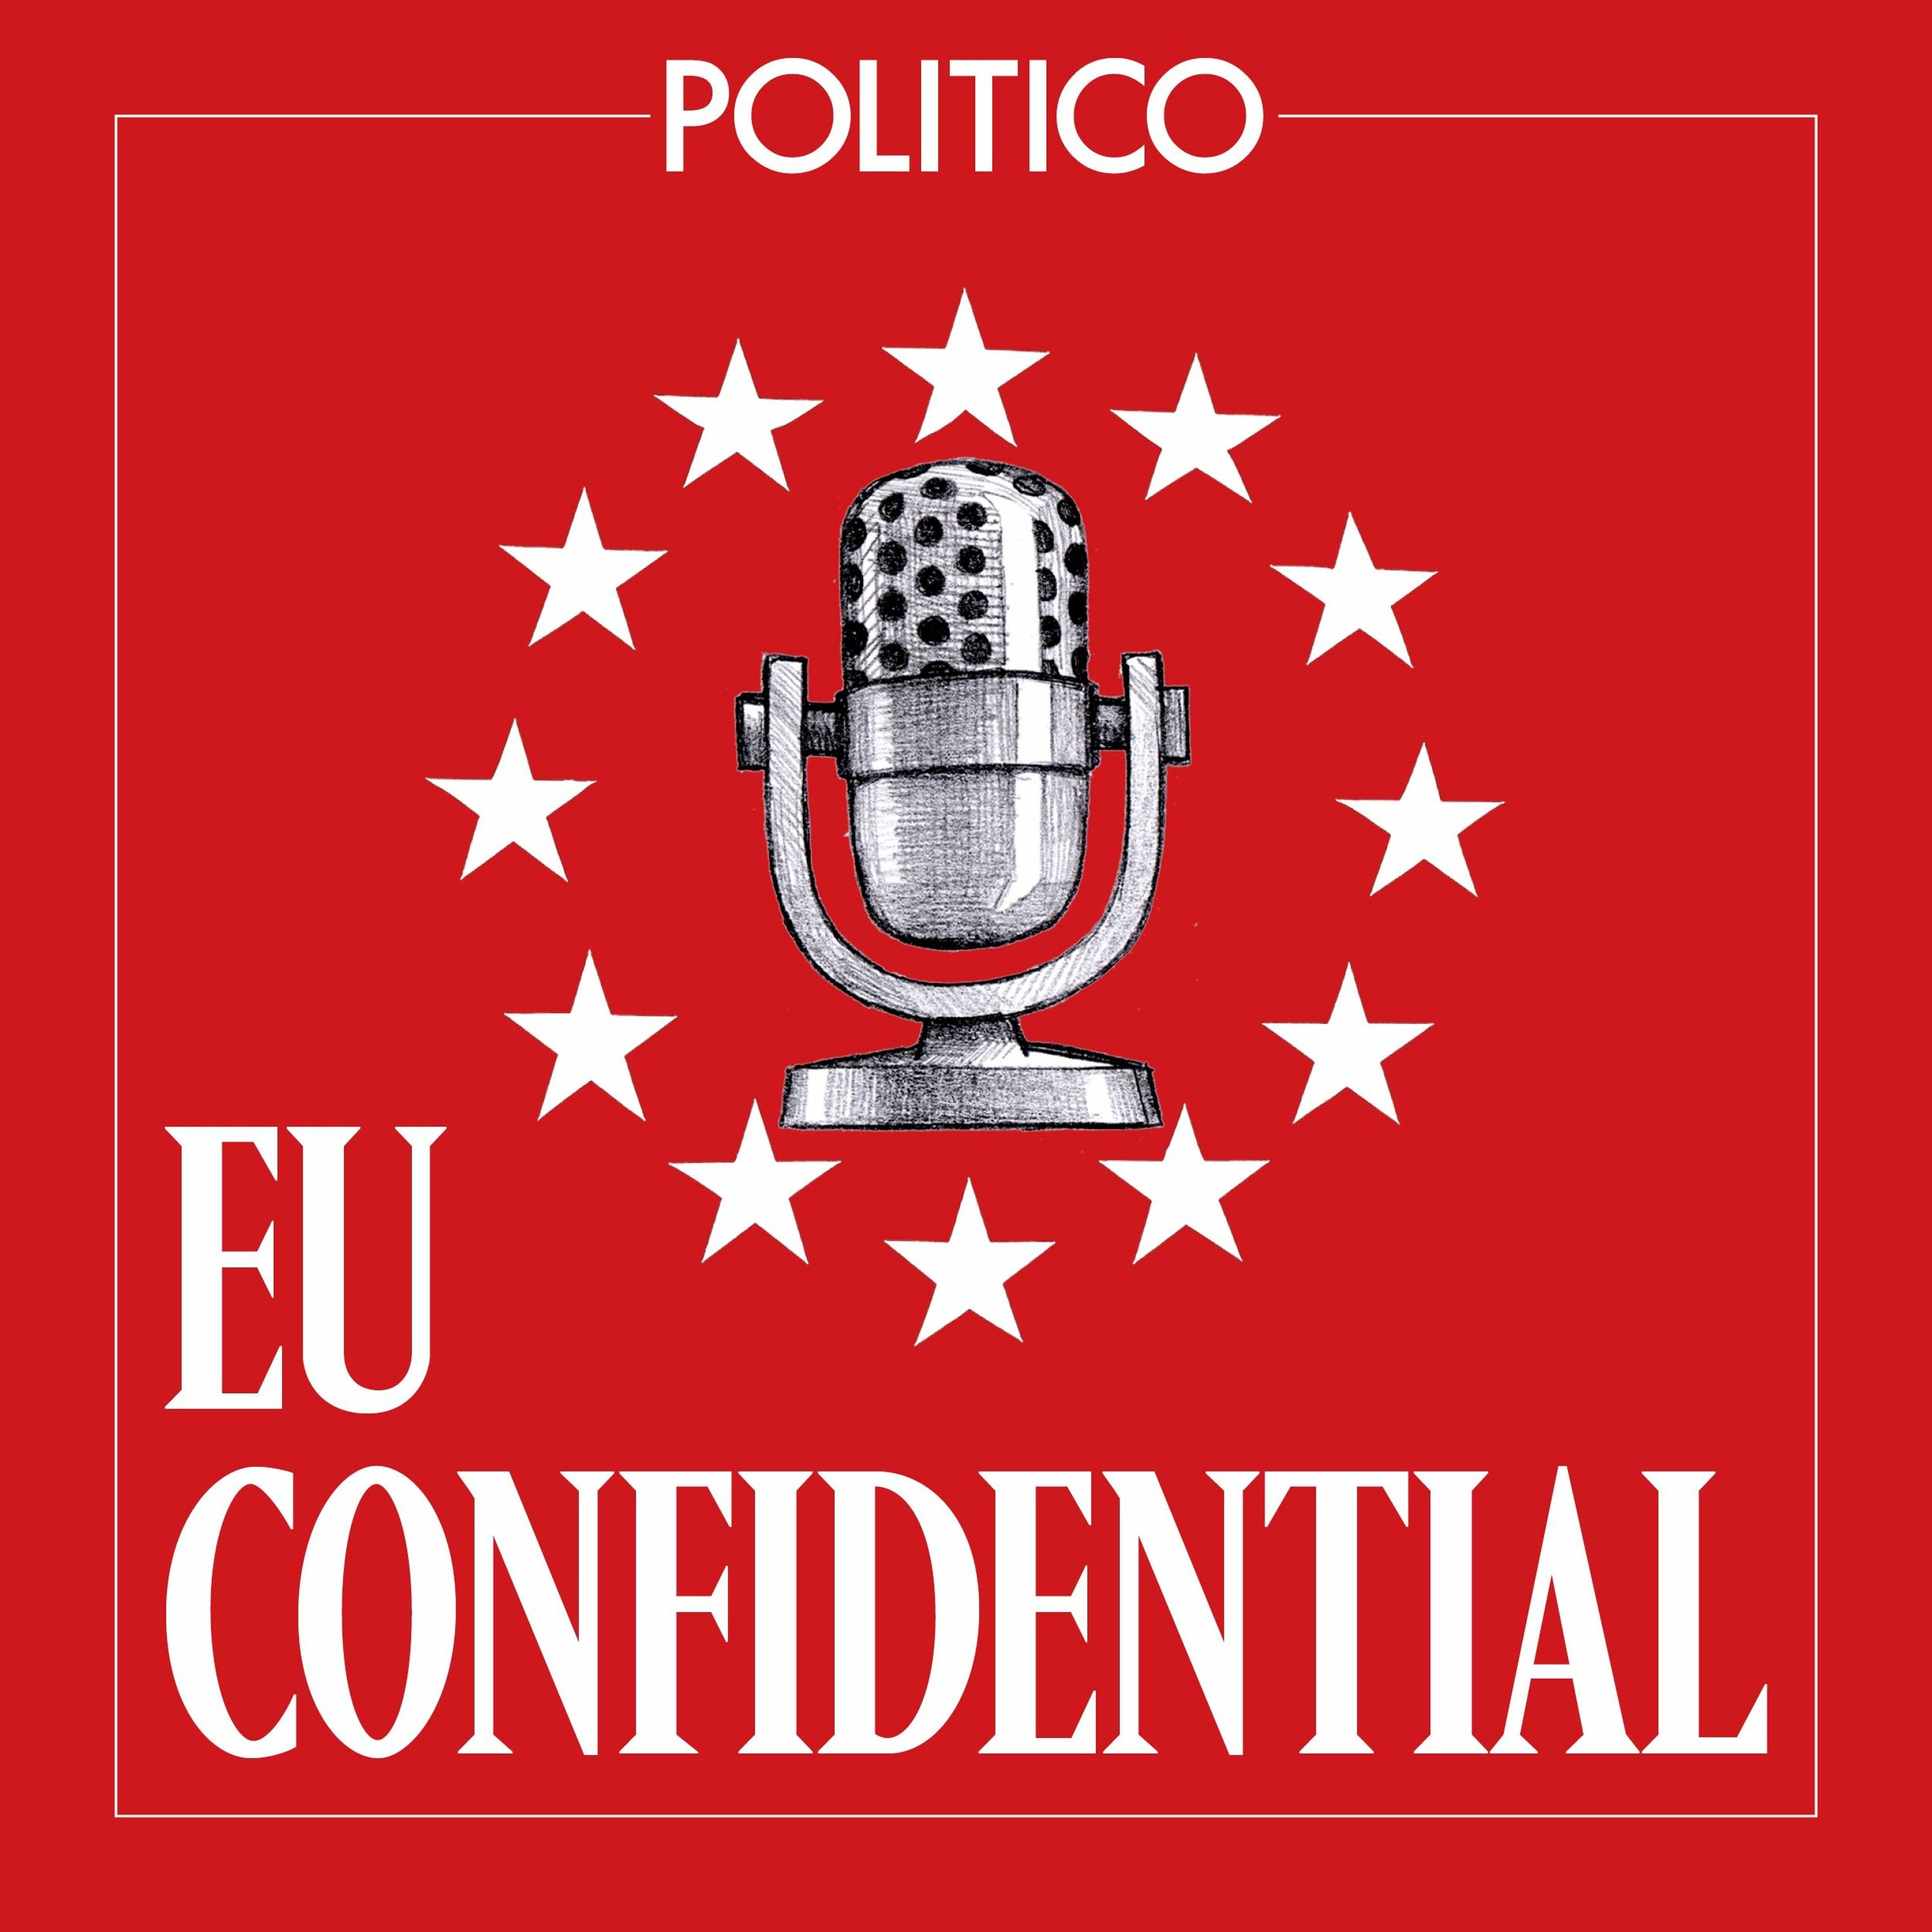 Episode 105, presented by Romania's EU presidency: David Miliband & political rebrands